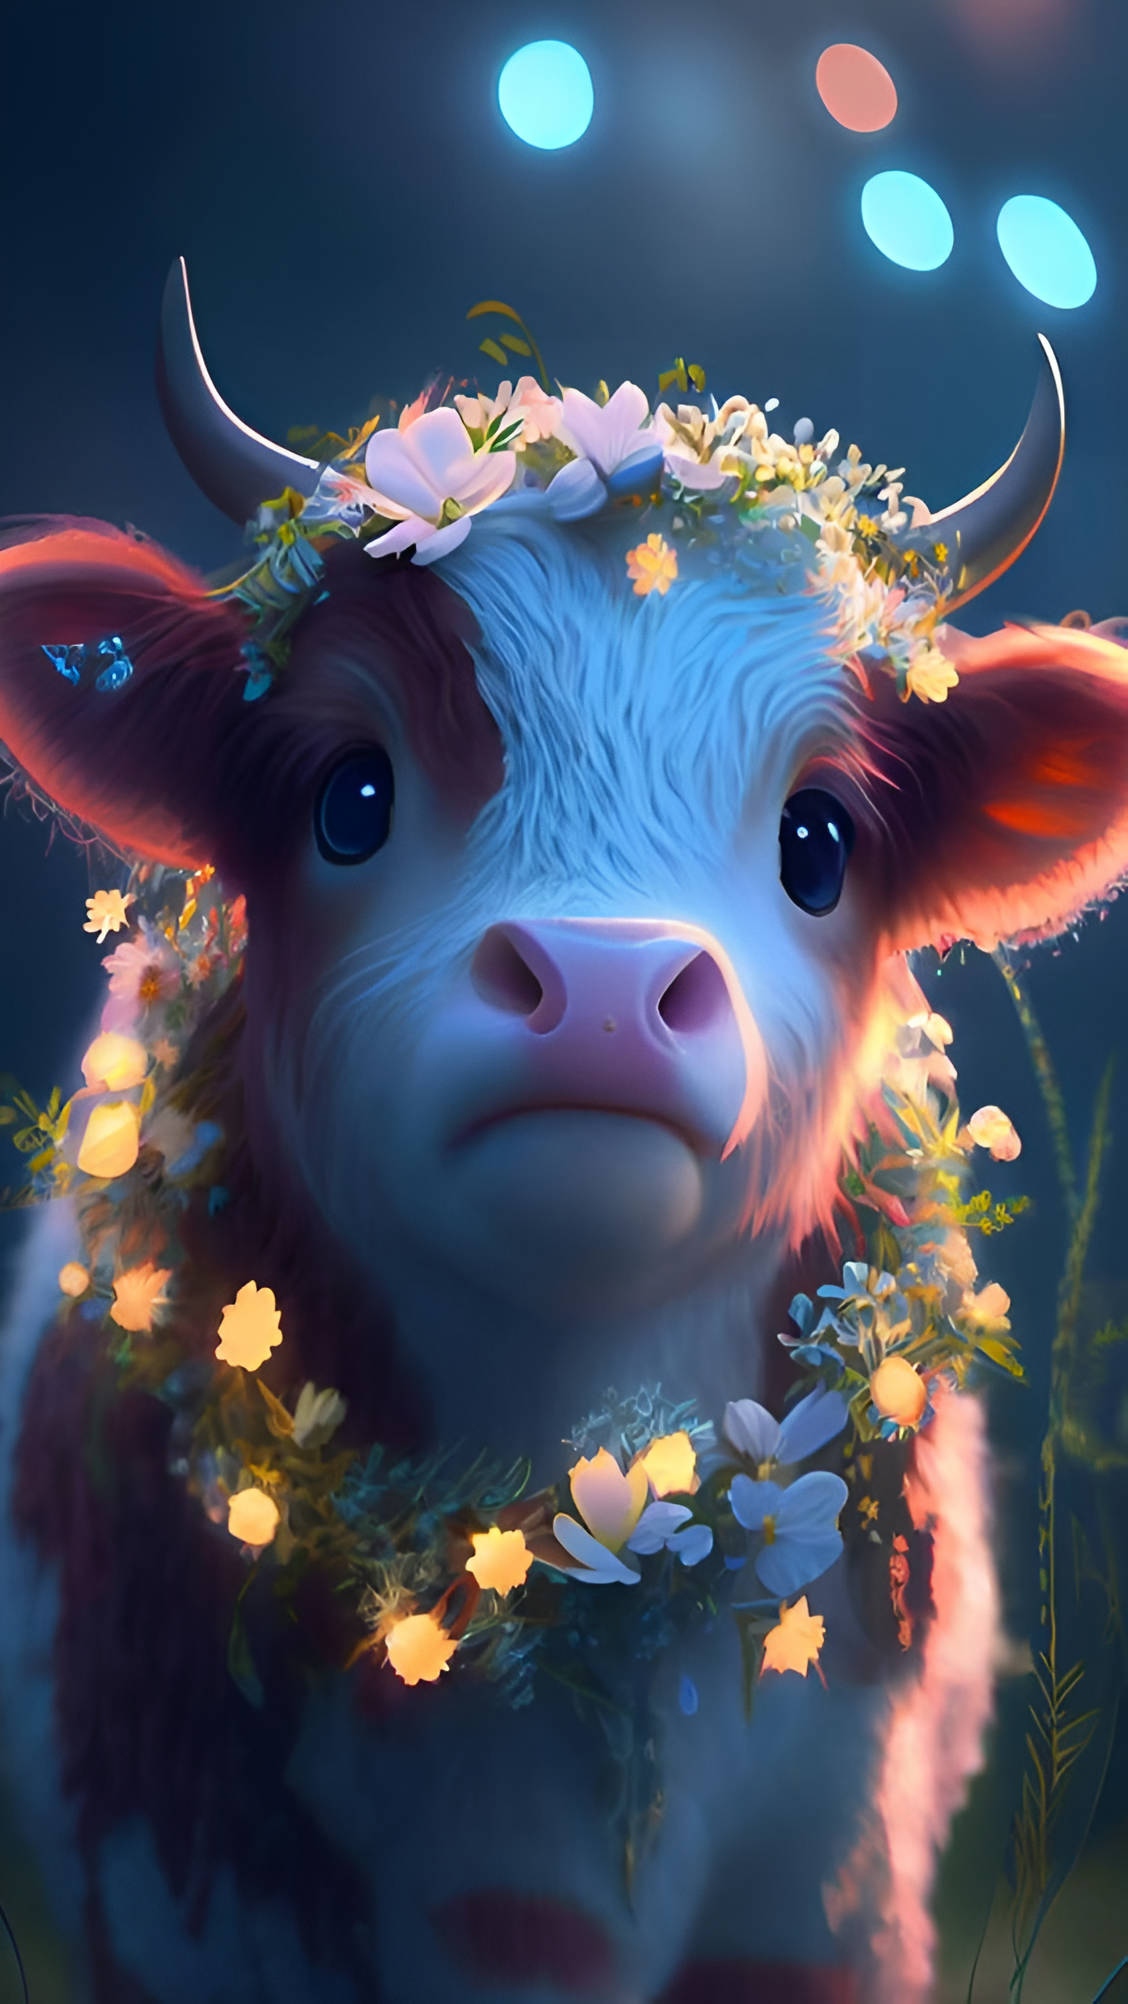 Cute cow Wallpaper Download